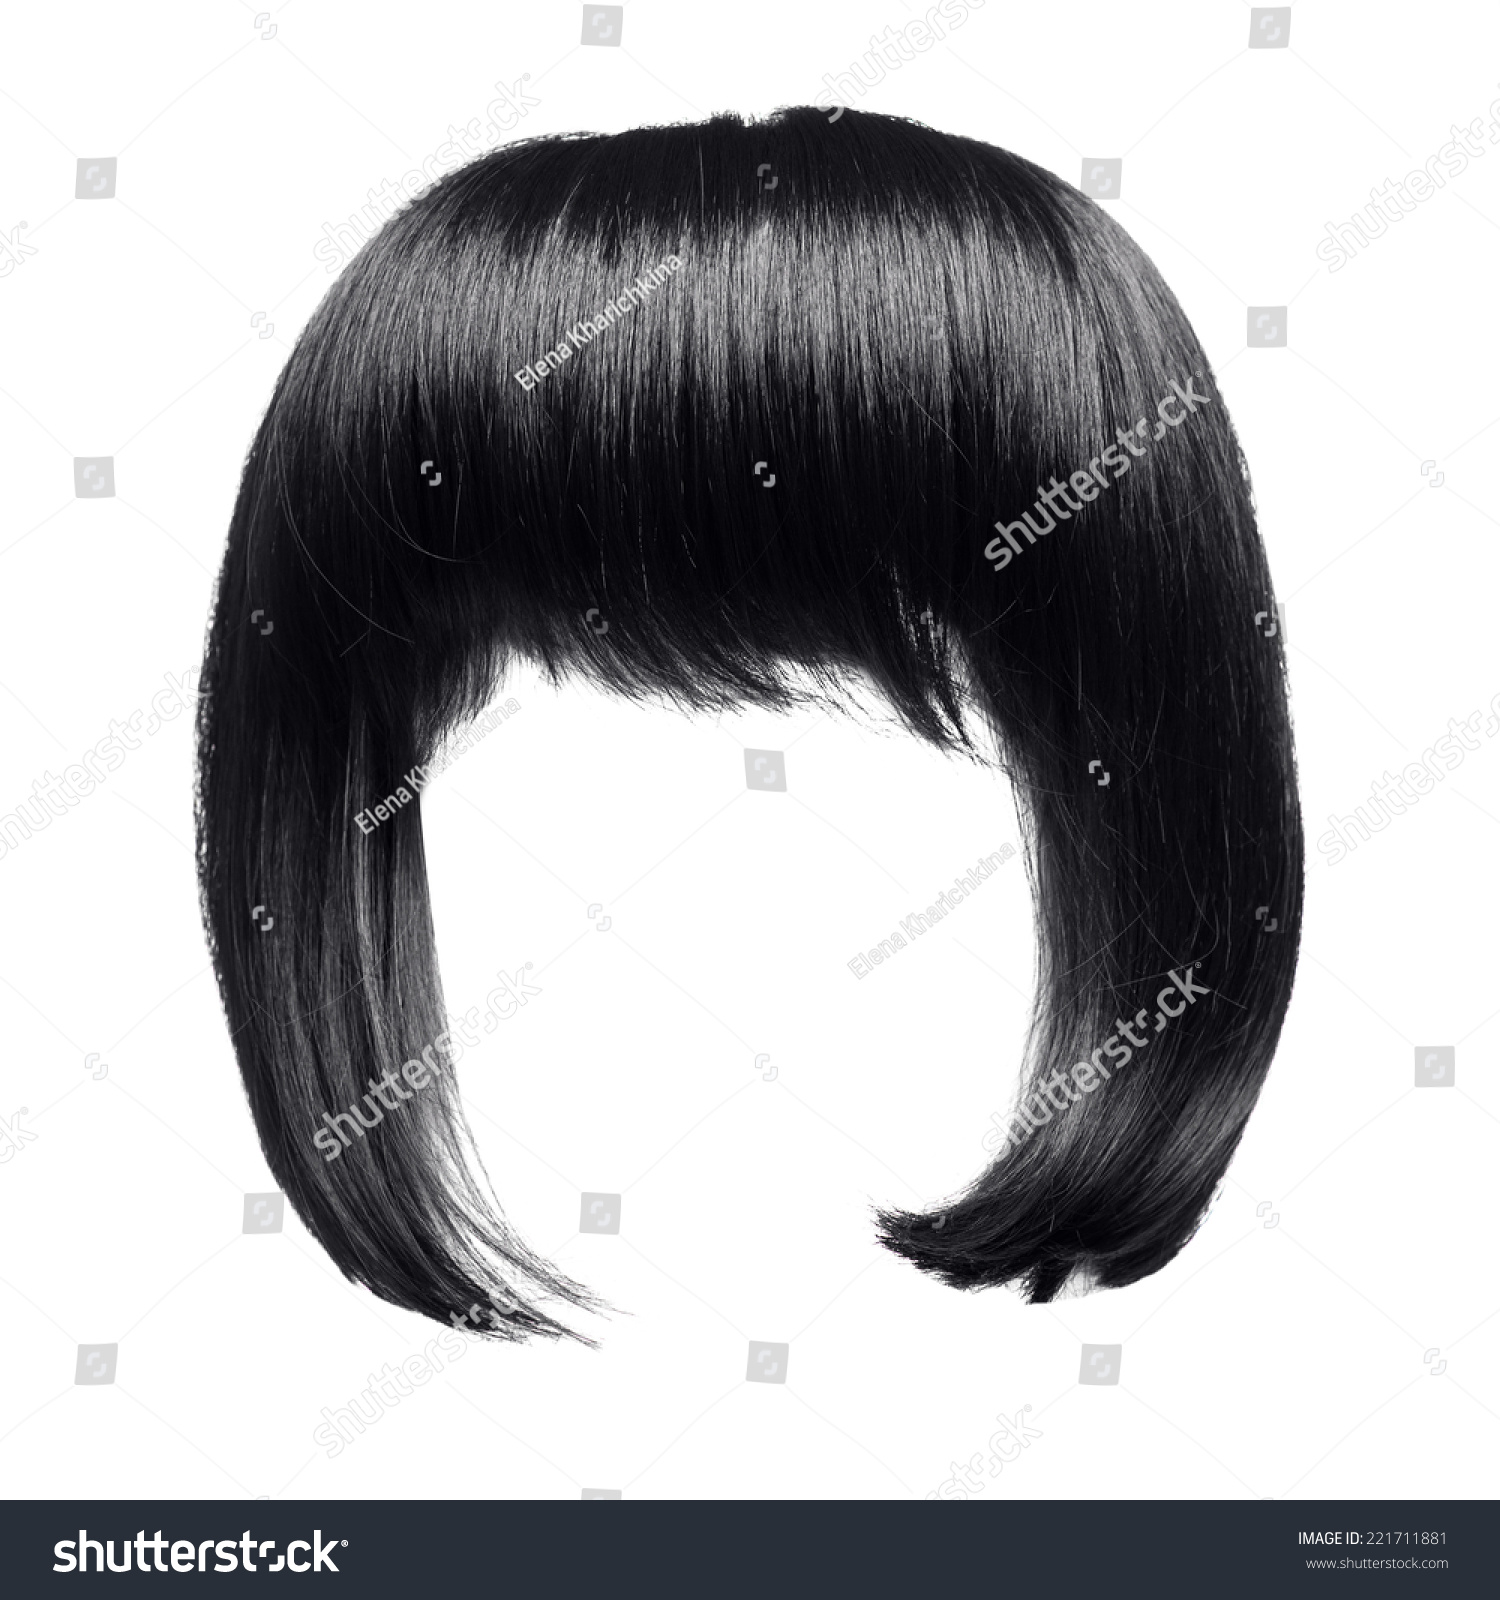 Black Hair Isolated Stock Photo 221711881 - Shutterstock